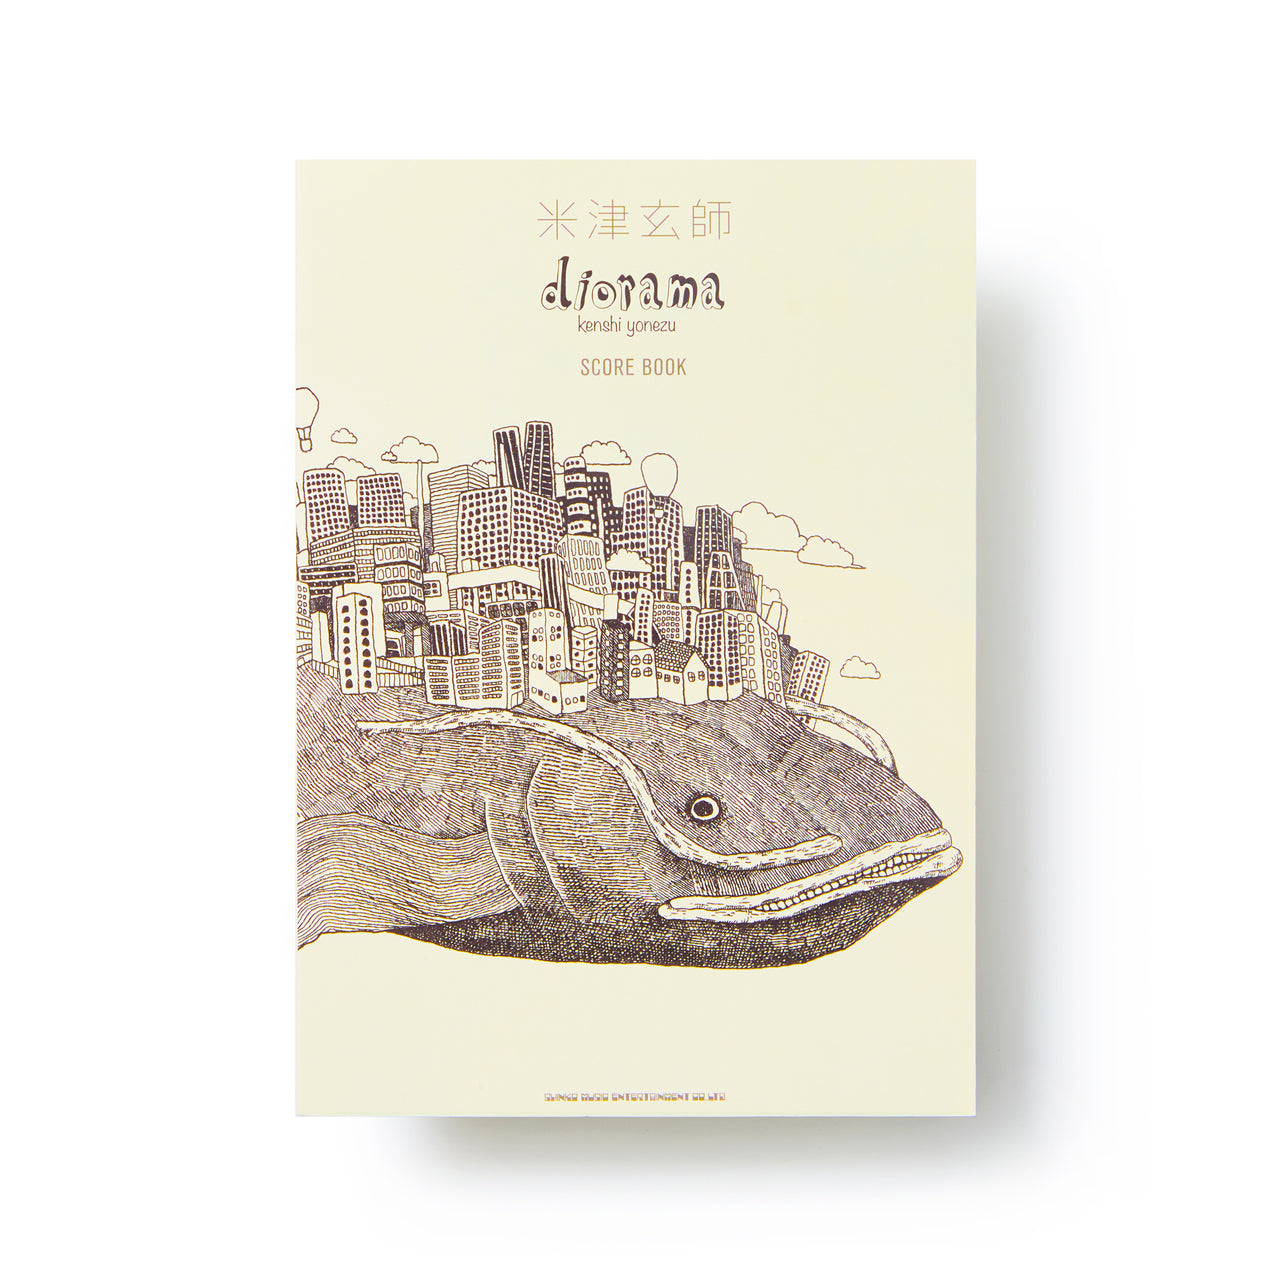 diorama」SCORE BOOK – KENSHI YONEZU ONLINE STORE